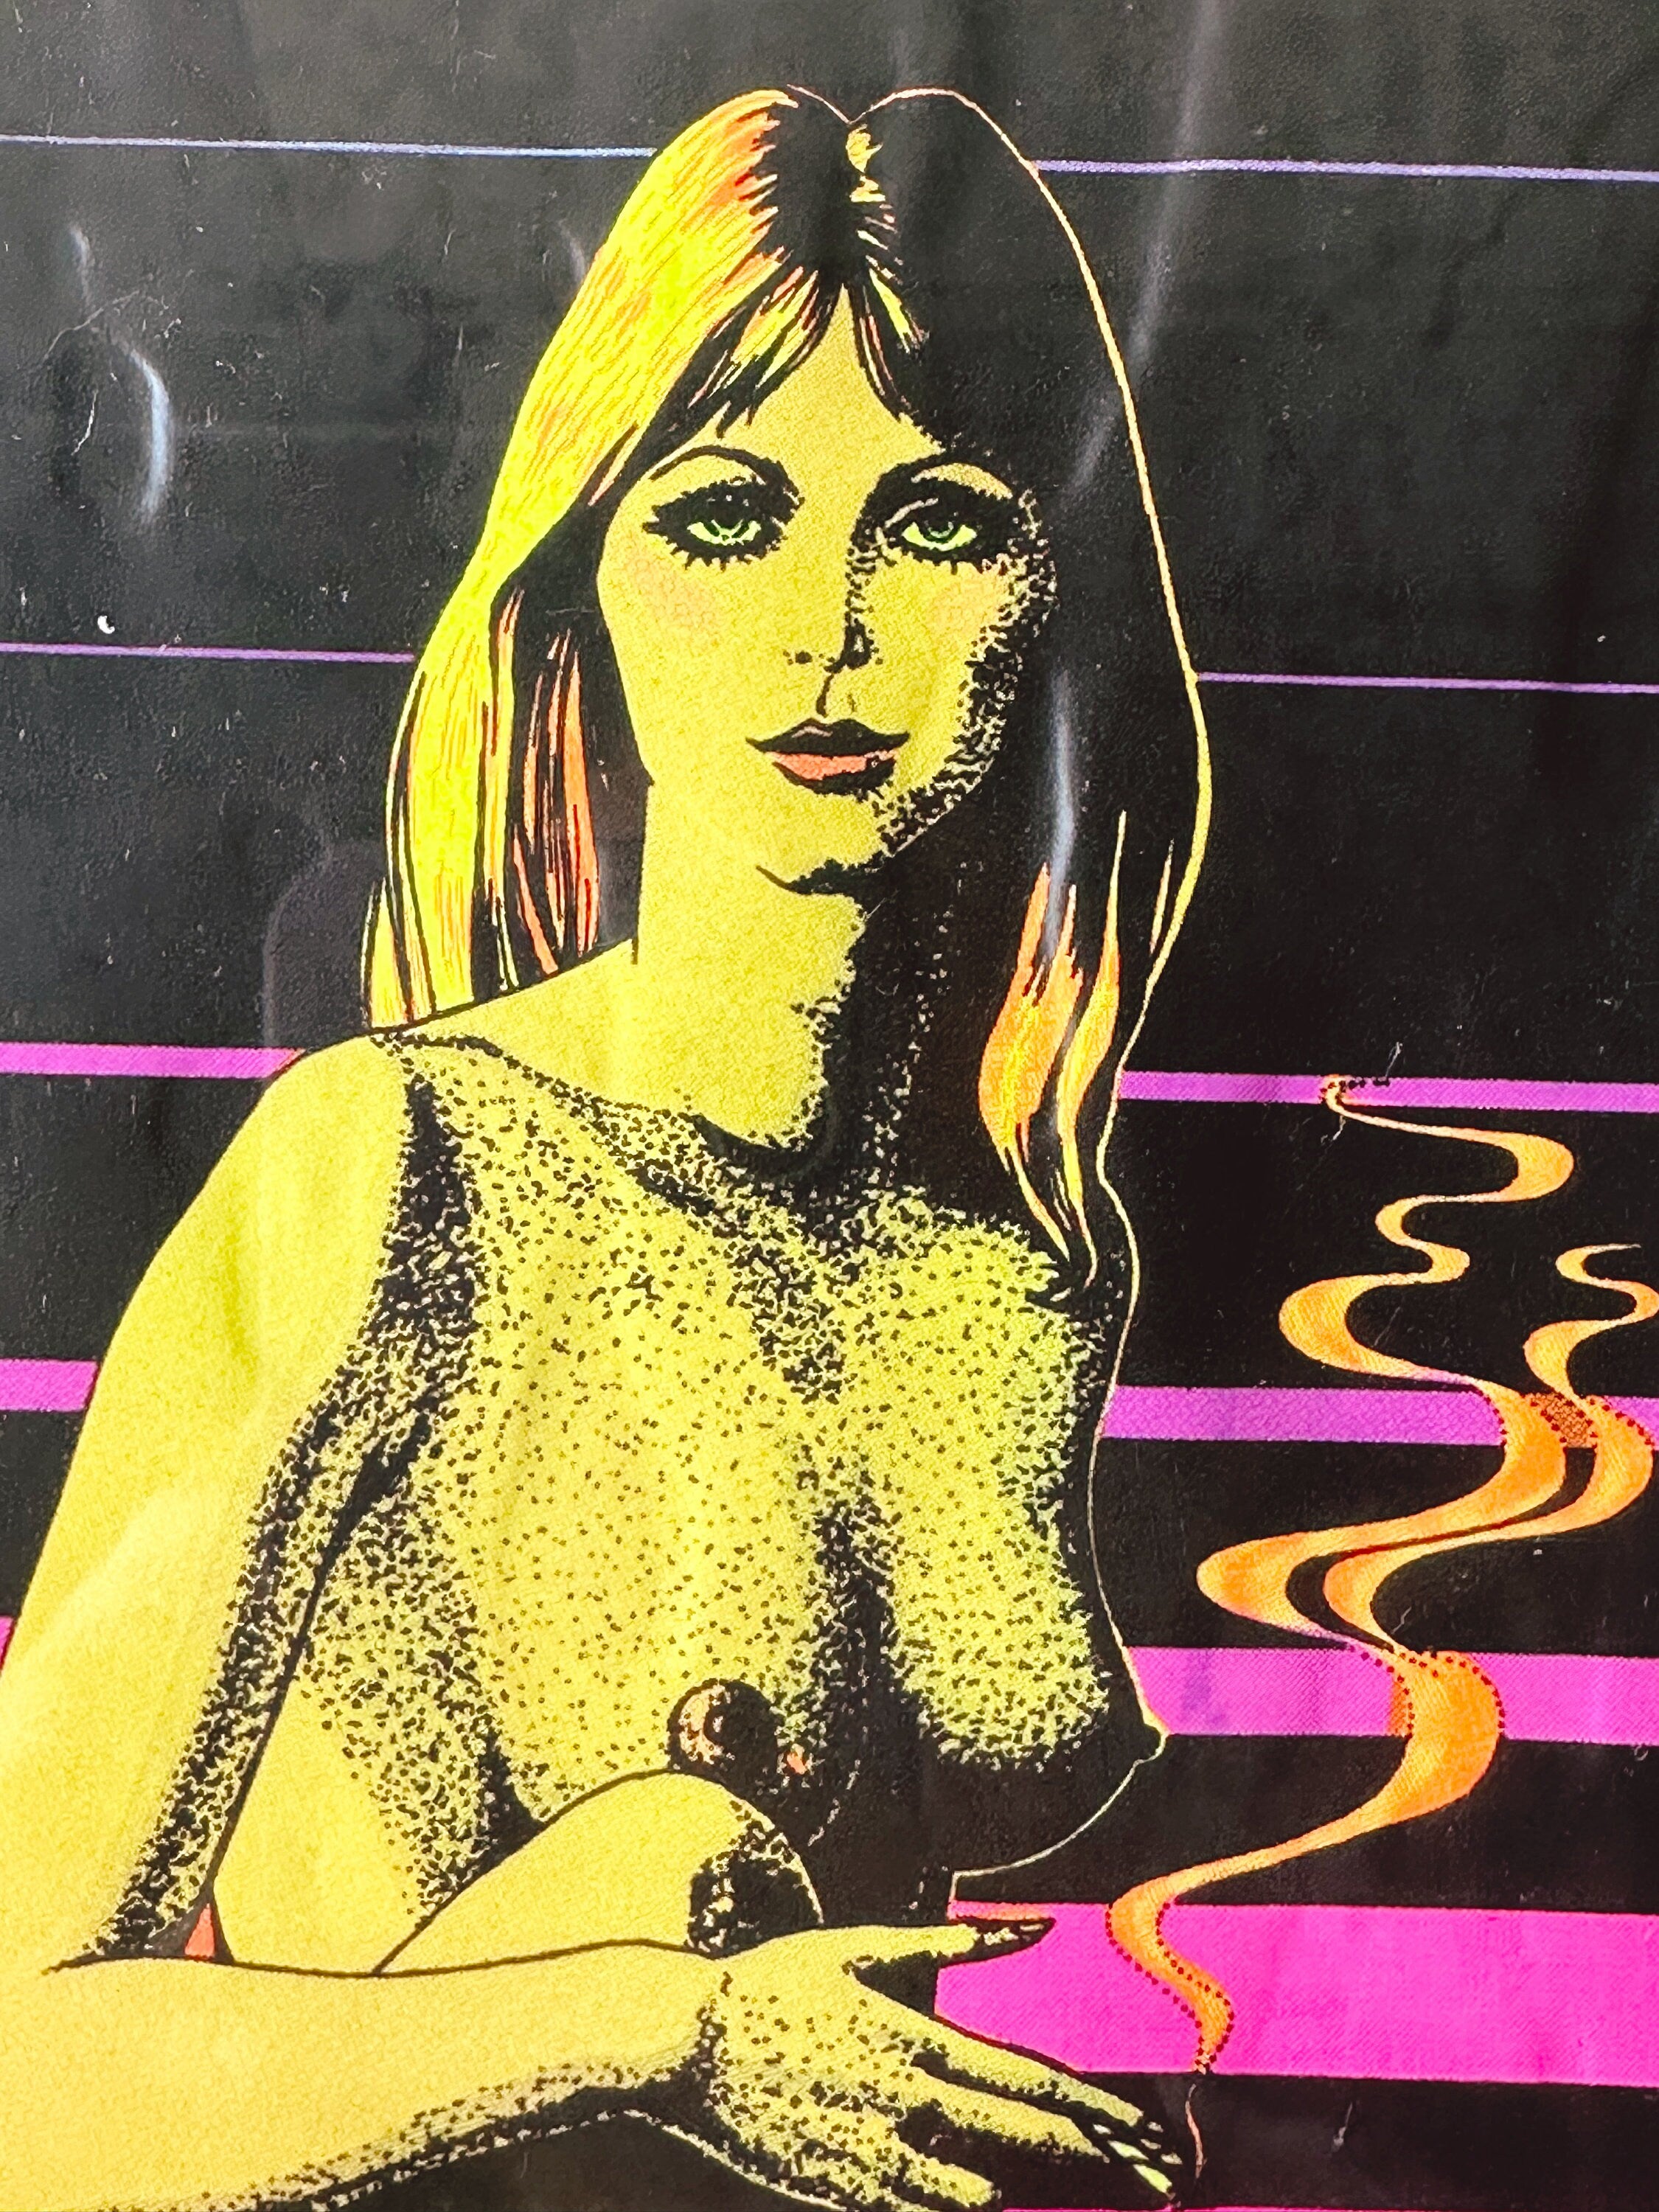 Vintage Marijuana Blacklight Poster of Smoking Nude Woman | Black Frame | Tobacciana Psychedelic Collectible Art | Gallery Wall Art